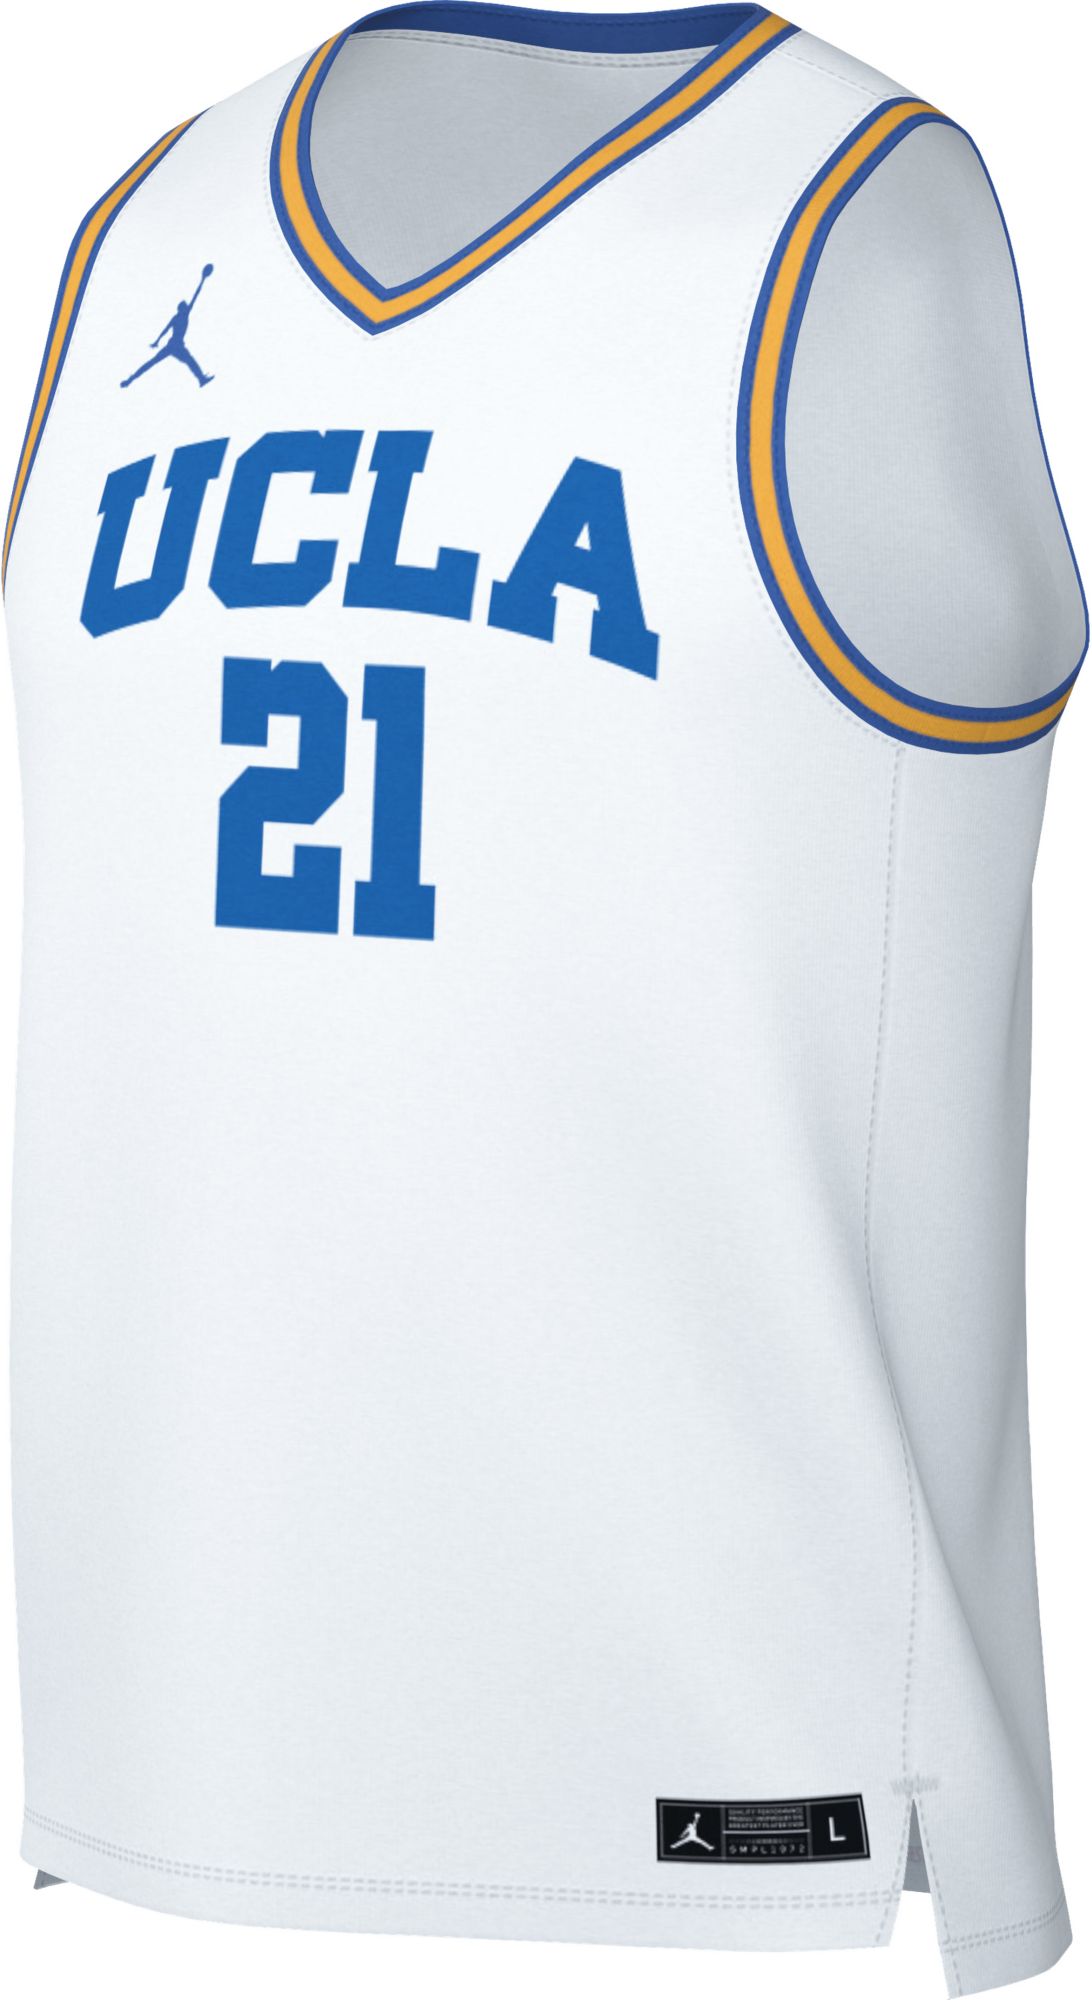 Jordan Men's UCLA Bruins #21 White Replica Basketball Jersey